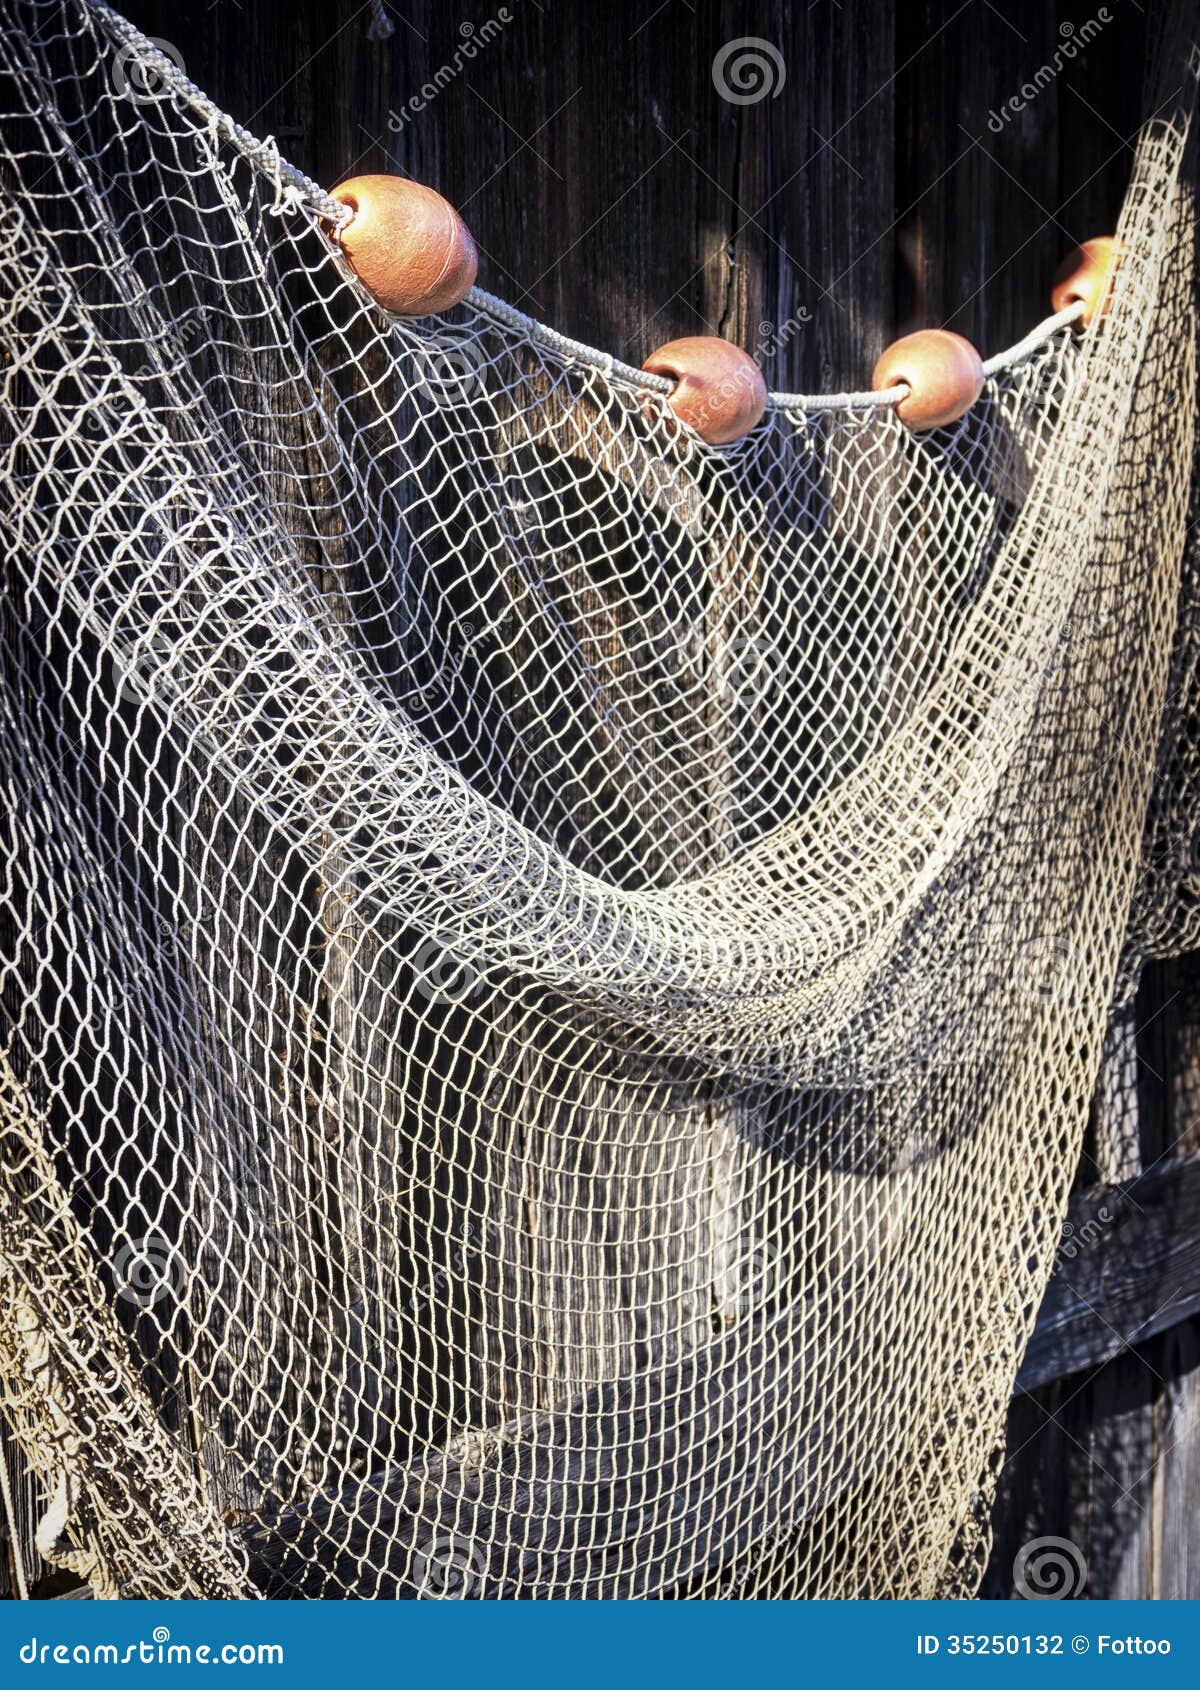 770 Old Fishing Net Cork Stock Photos - Free & Royalty-Free Stock